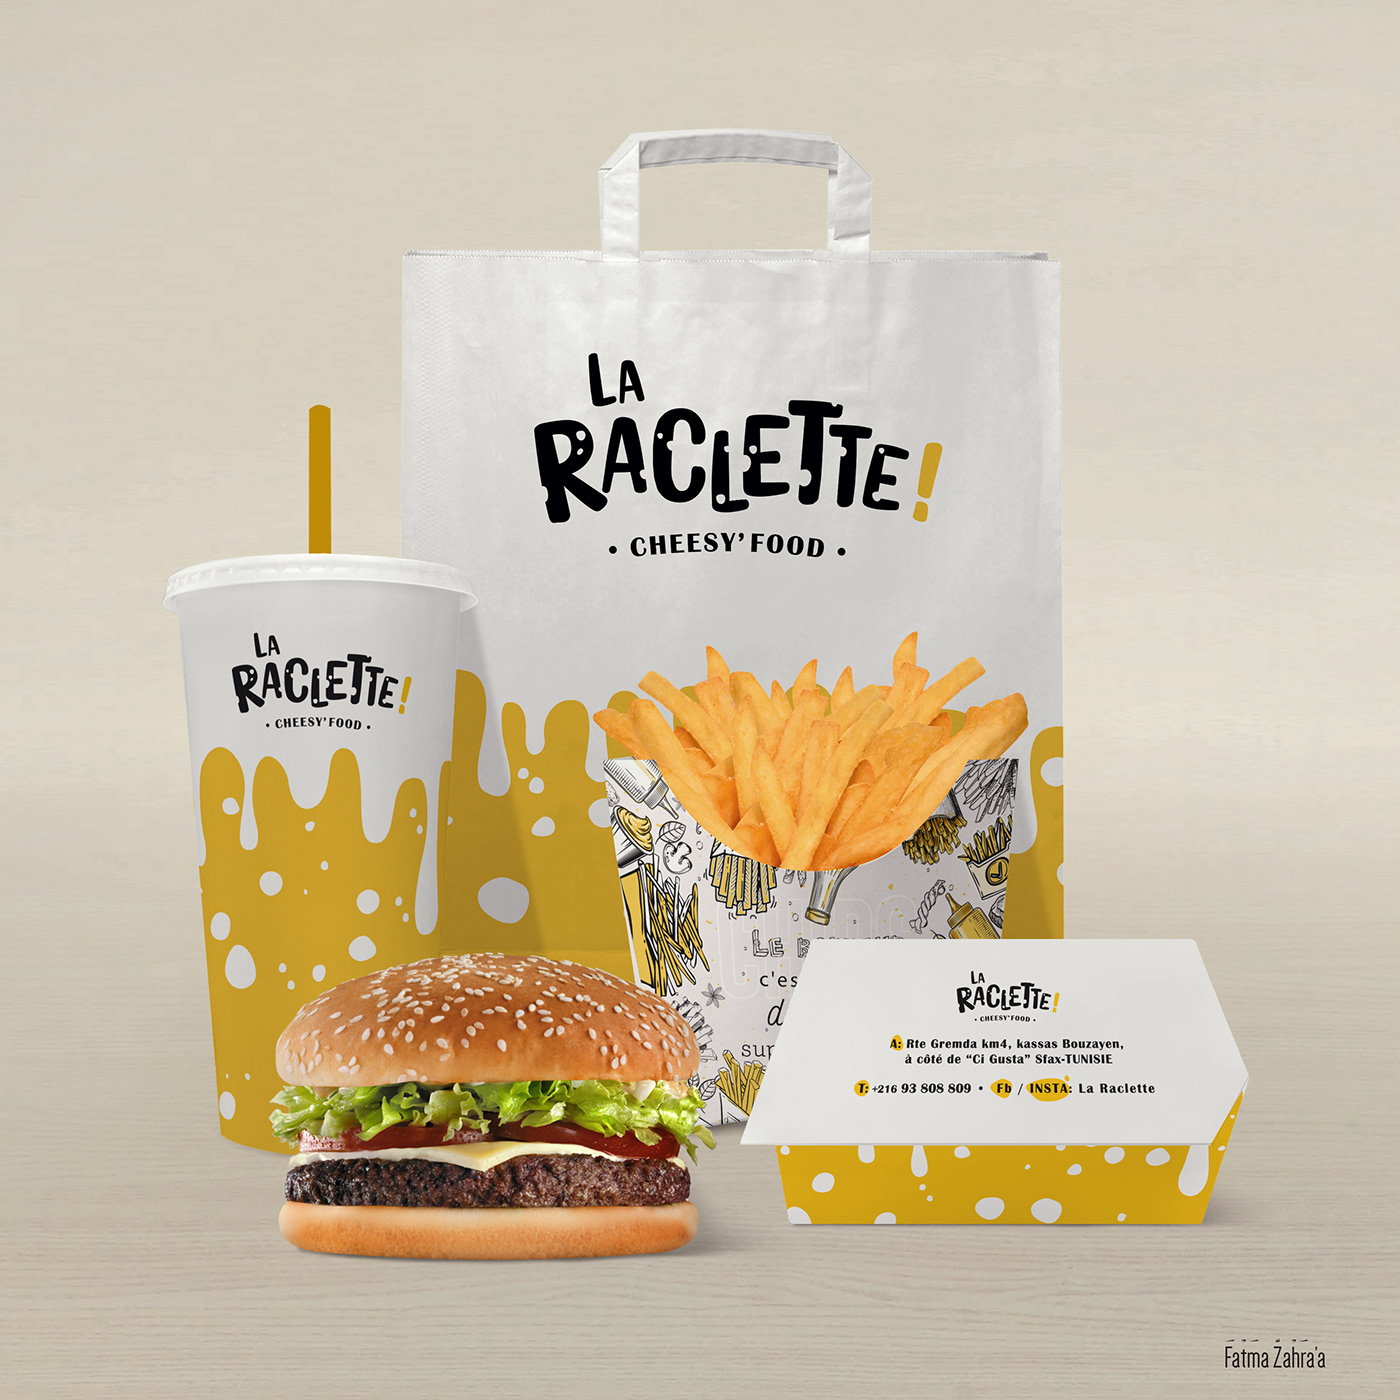 Cheese cheesy food corporate identity Logo Design raclette Sfax think create tunisia visual identity